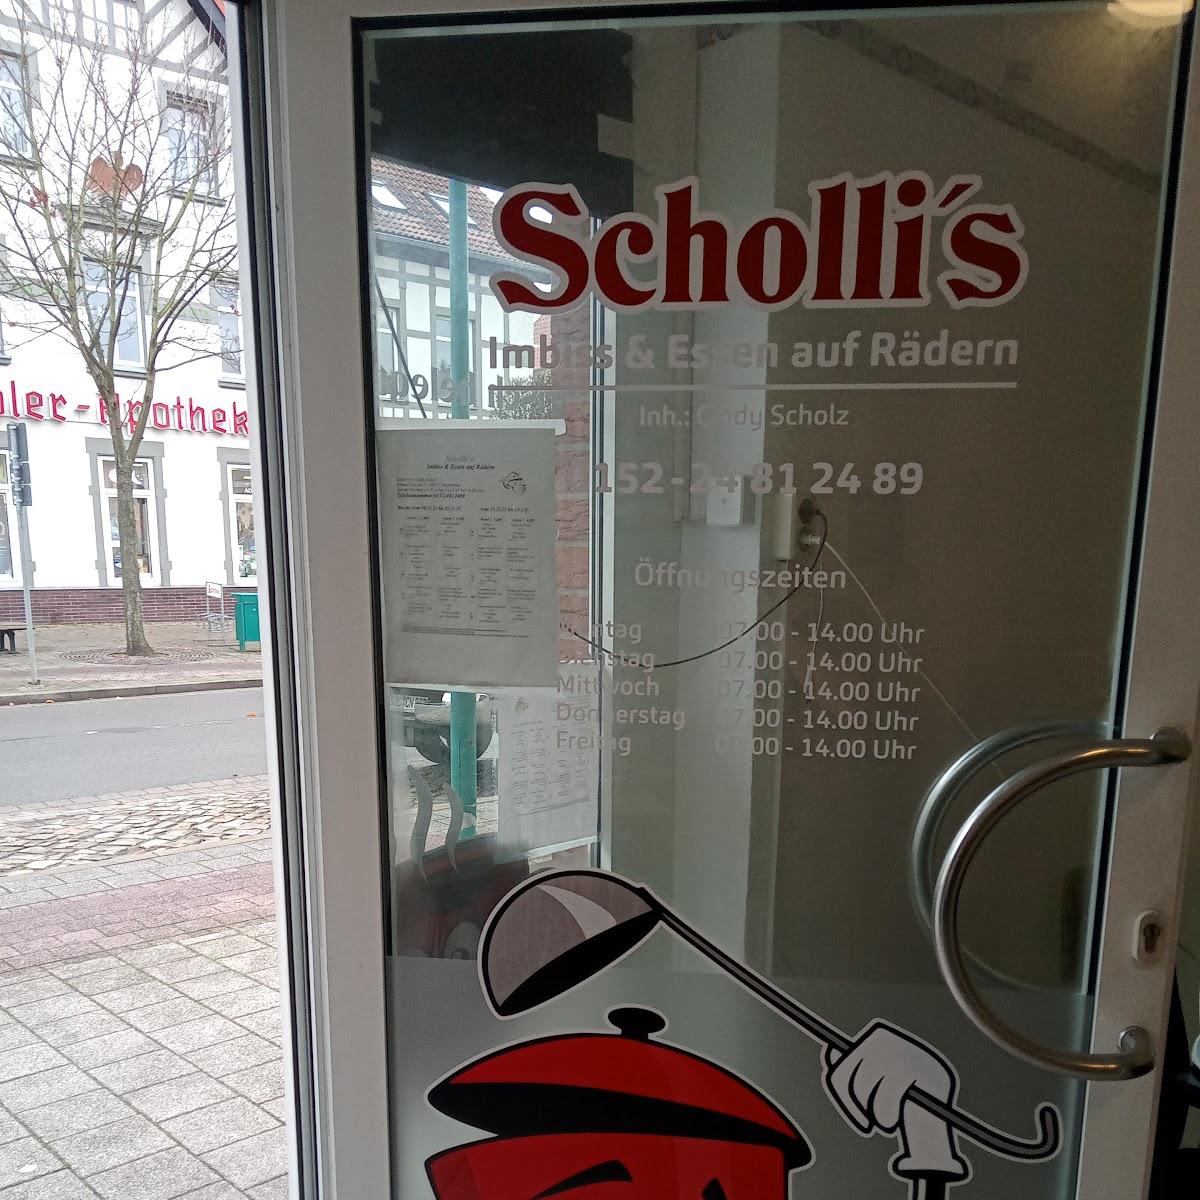 Restaurant "Scholli